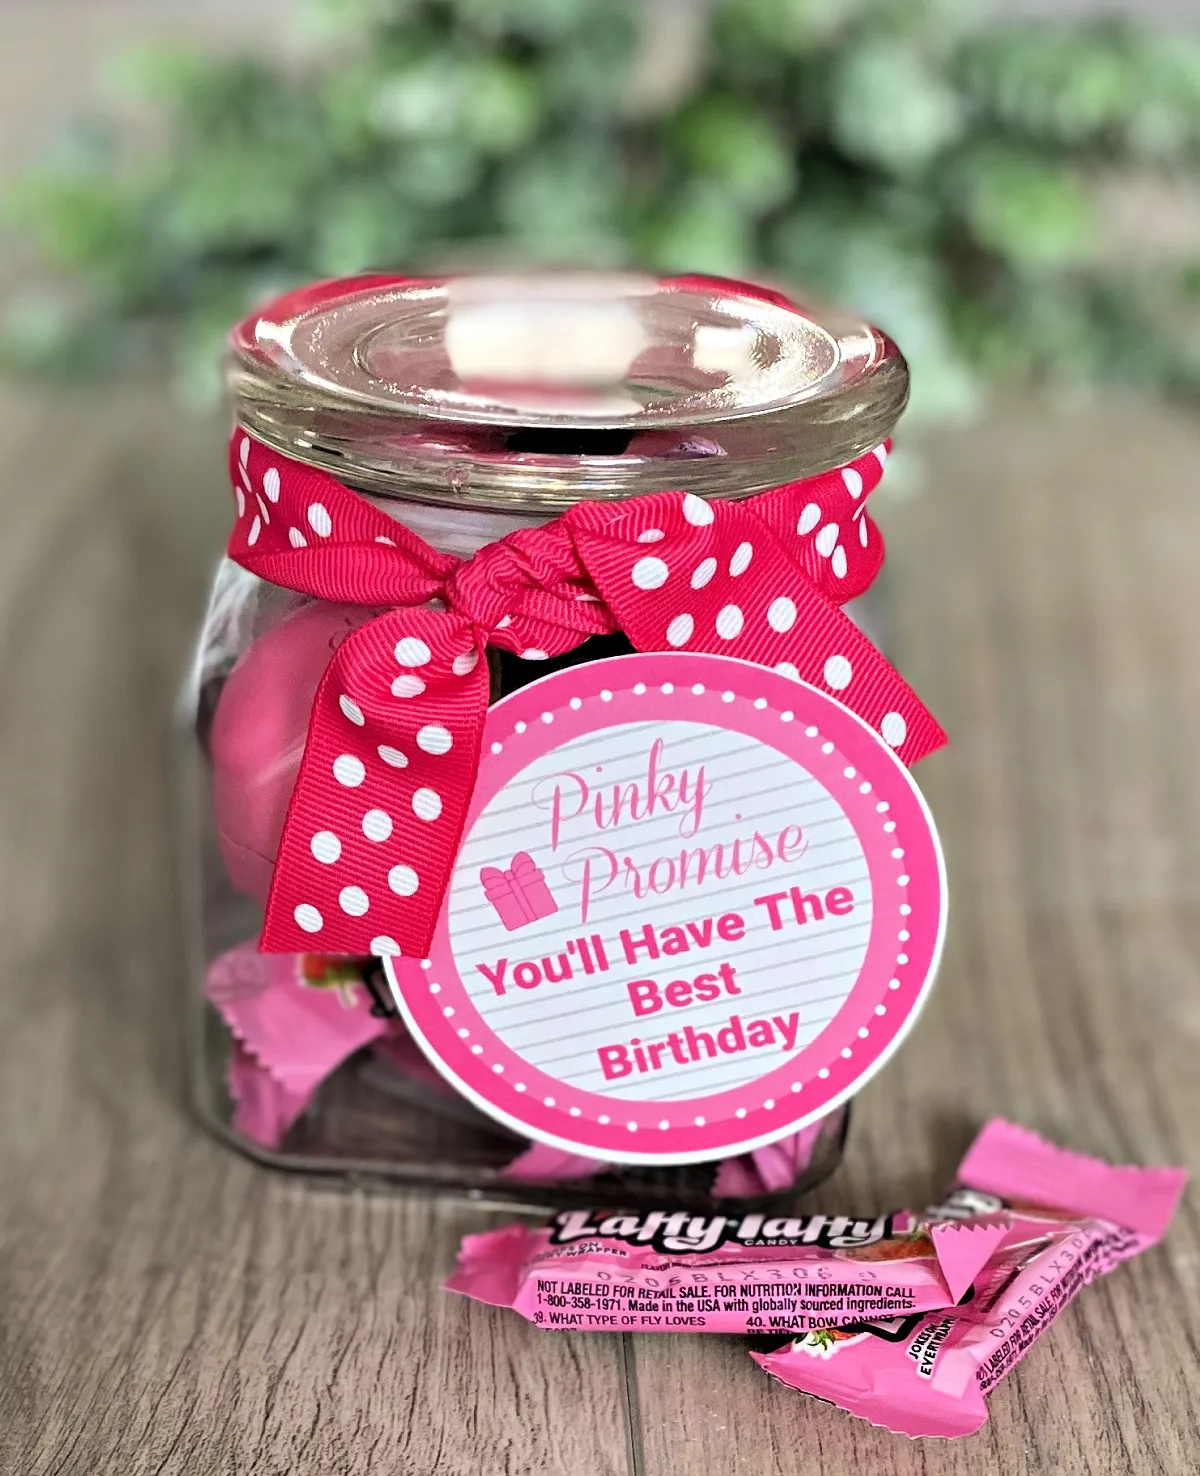 Fun Pink Themed Birthday Gift: